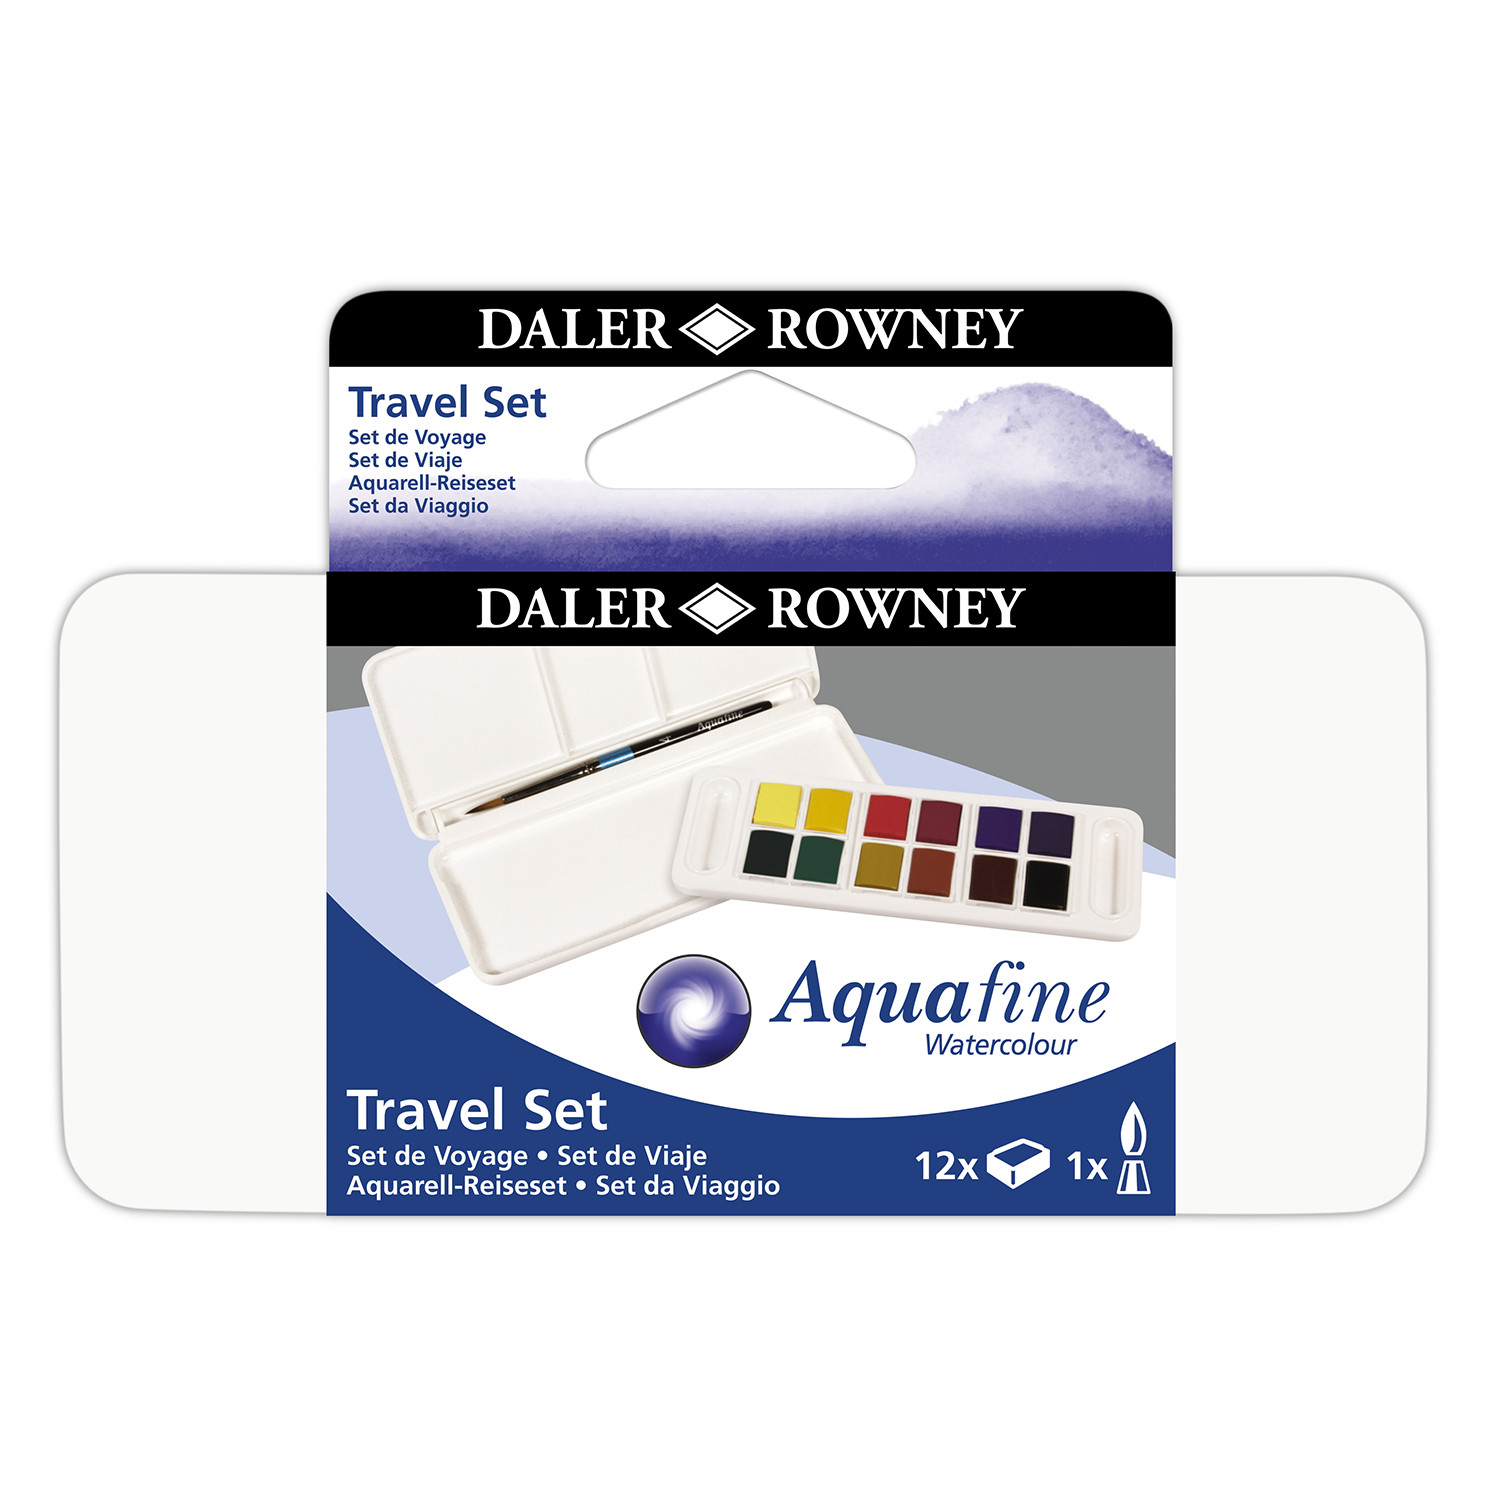 Daler-Rowney Aquafine Watercolour Travel Set Image 2